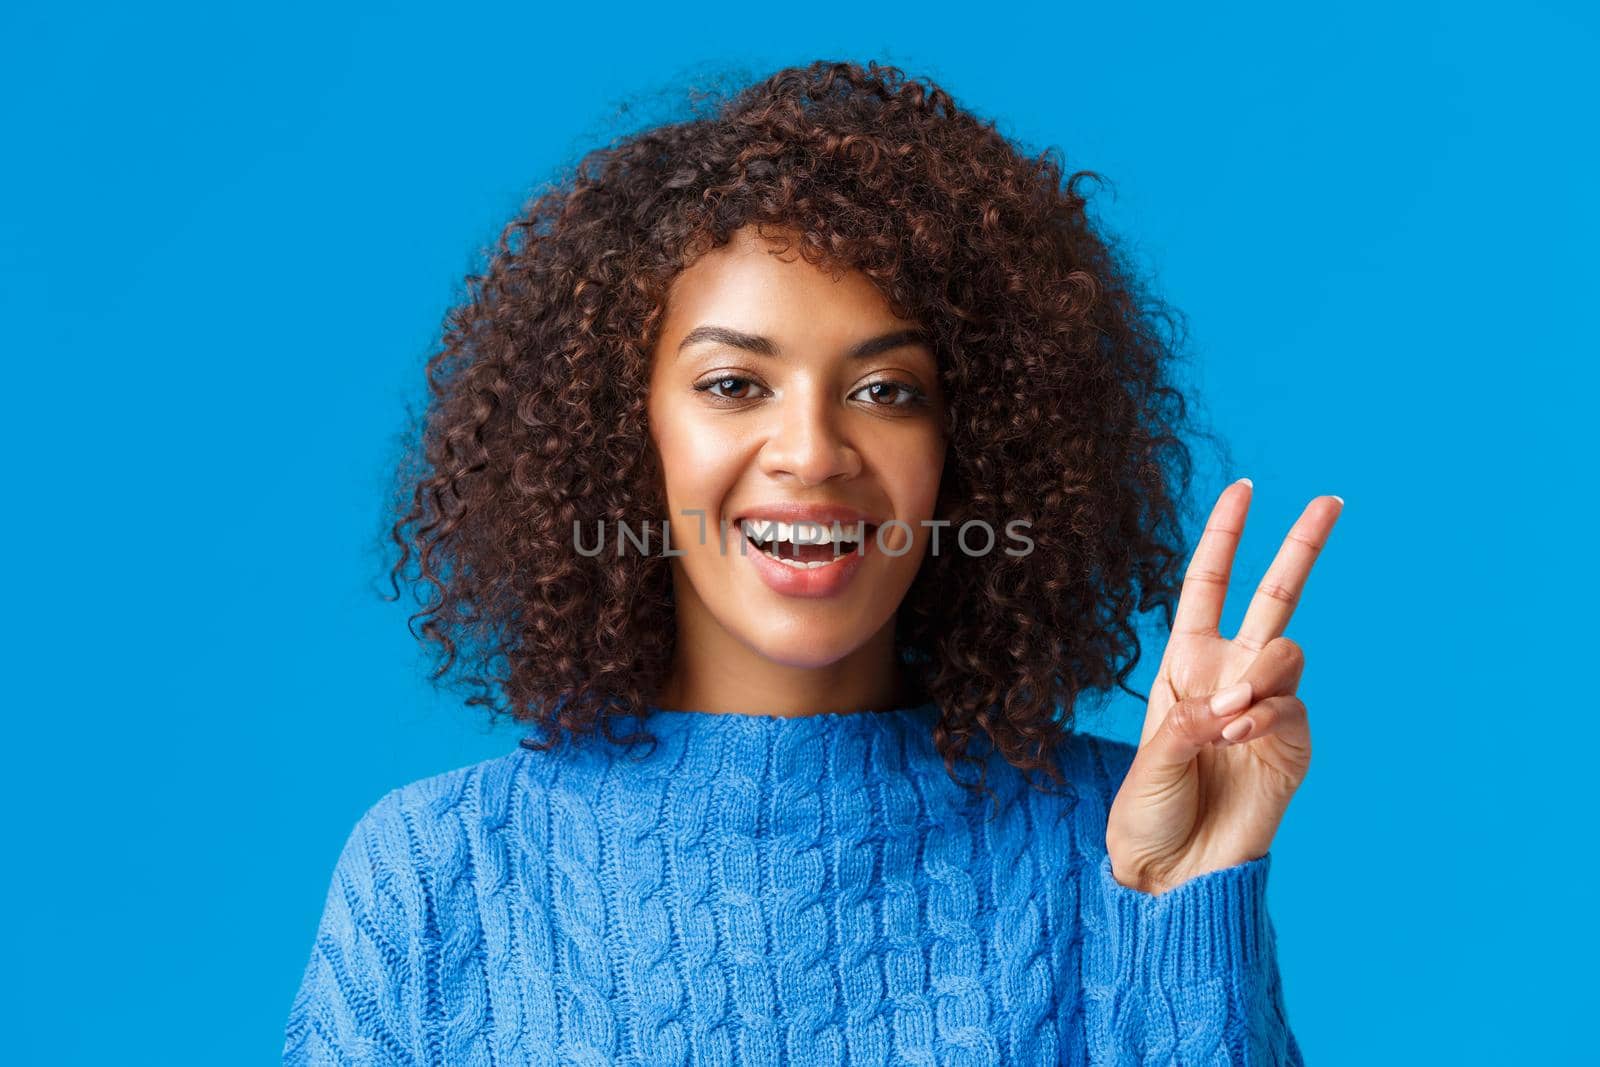 Close-up portrait carefree, happy joyful woman celebrating holidays, wishing everyone good new year, showing peace sign and smiling joyfully, express posivity and joy, wearing sweater.